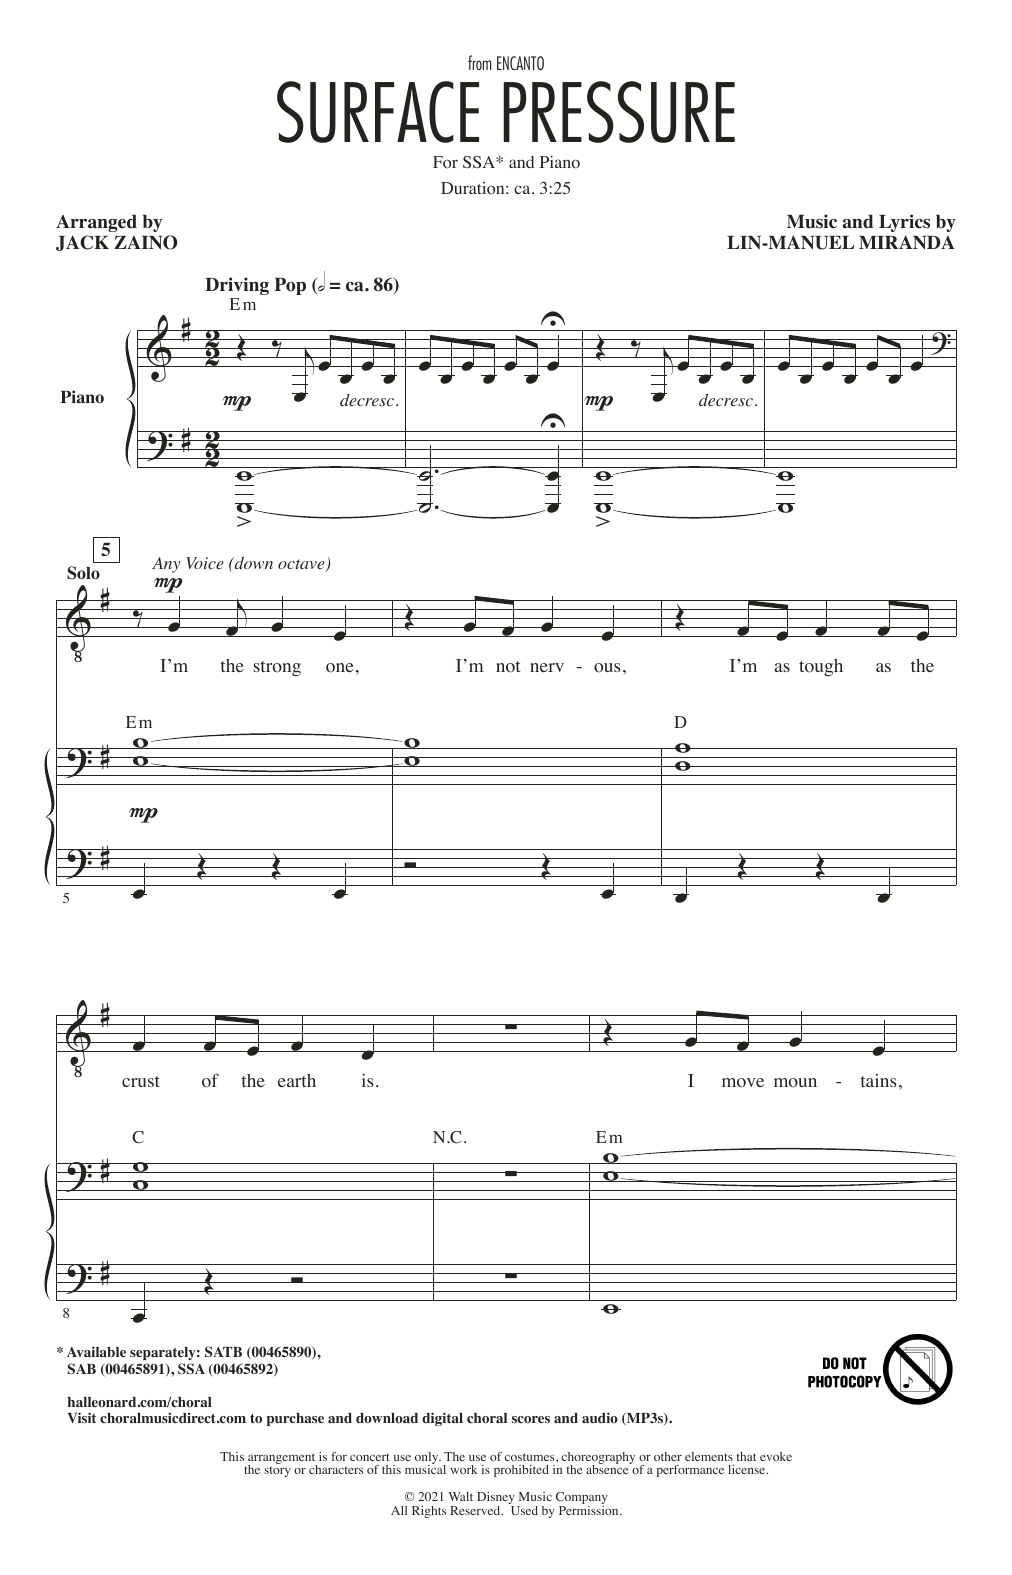 Lin-Manuel Miranda Surface Pressure (from Encanto) (arr. Jack Zaino) Sheet Music Notes & Chords for SAB Choir - Download or Print PDF